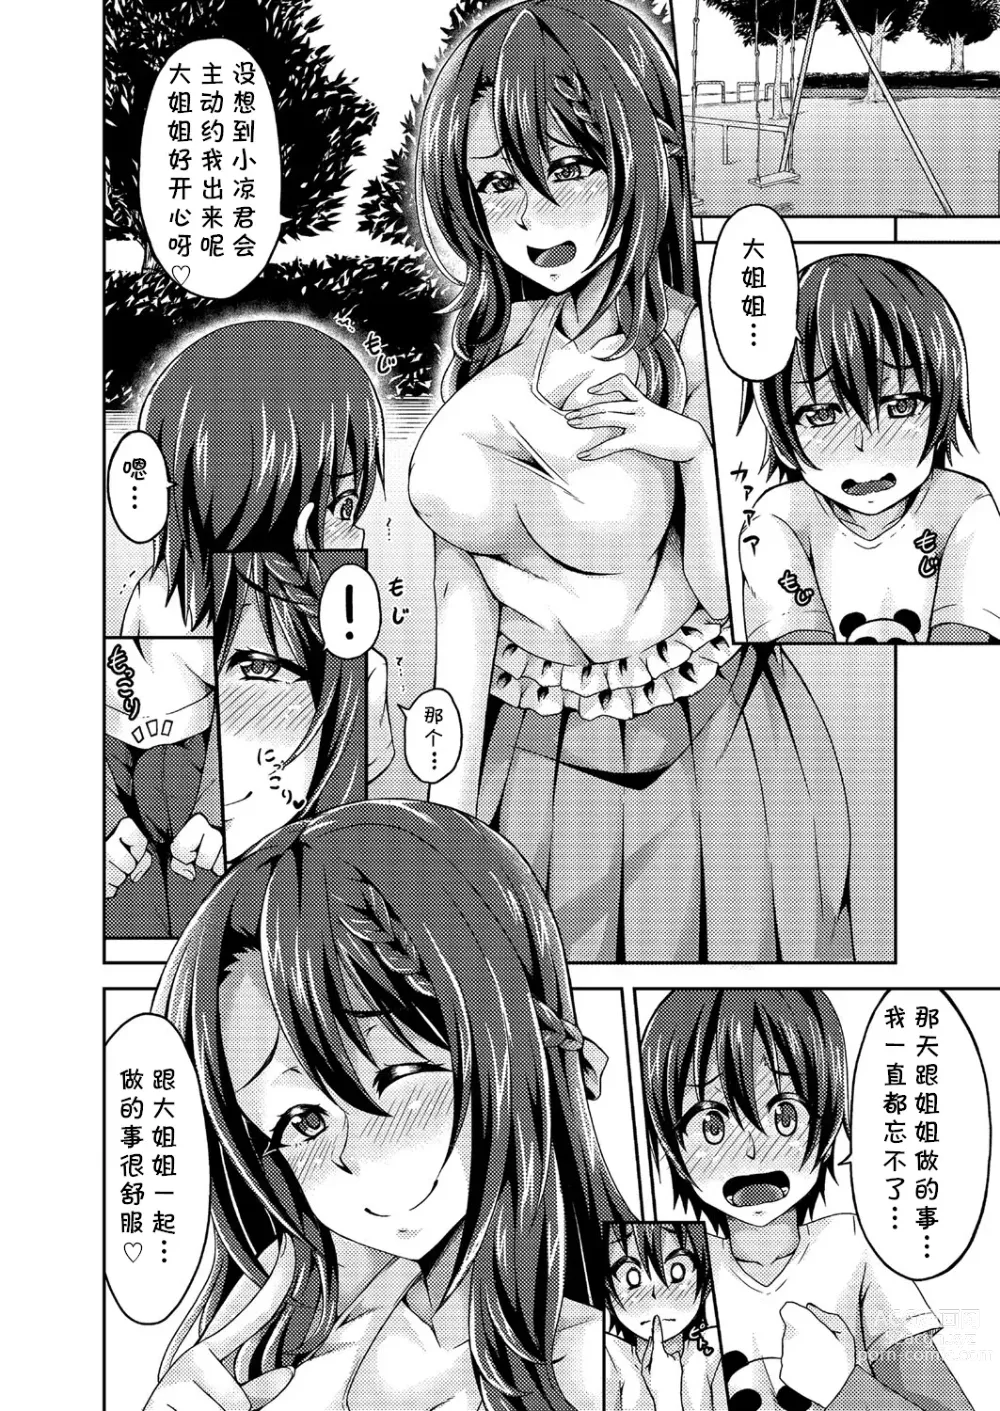 Page 6 of manga Minna, Oneesan no Mono